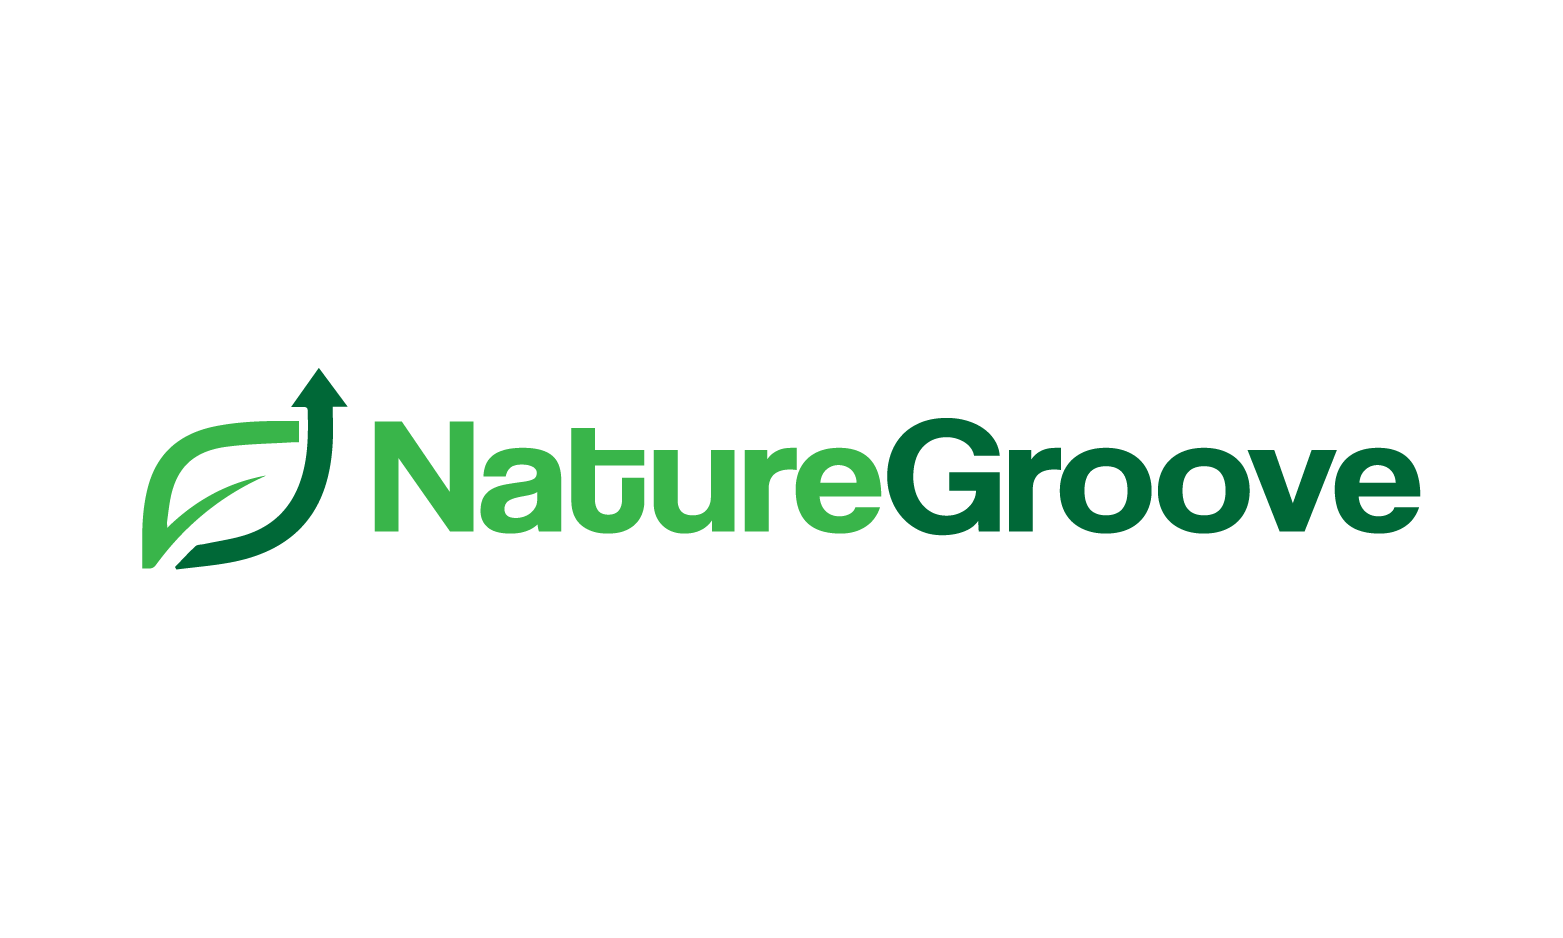 NatureGroove.com - Creative brandable domain for sale